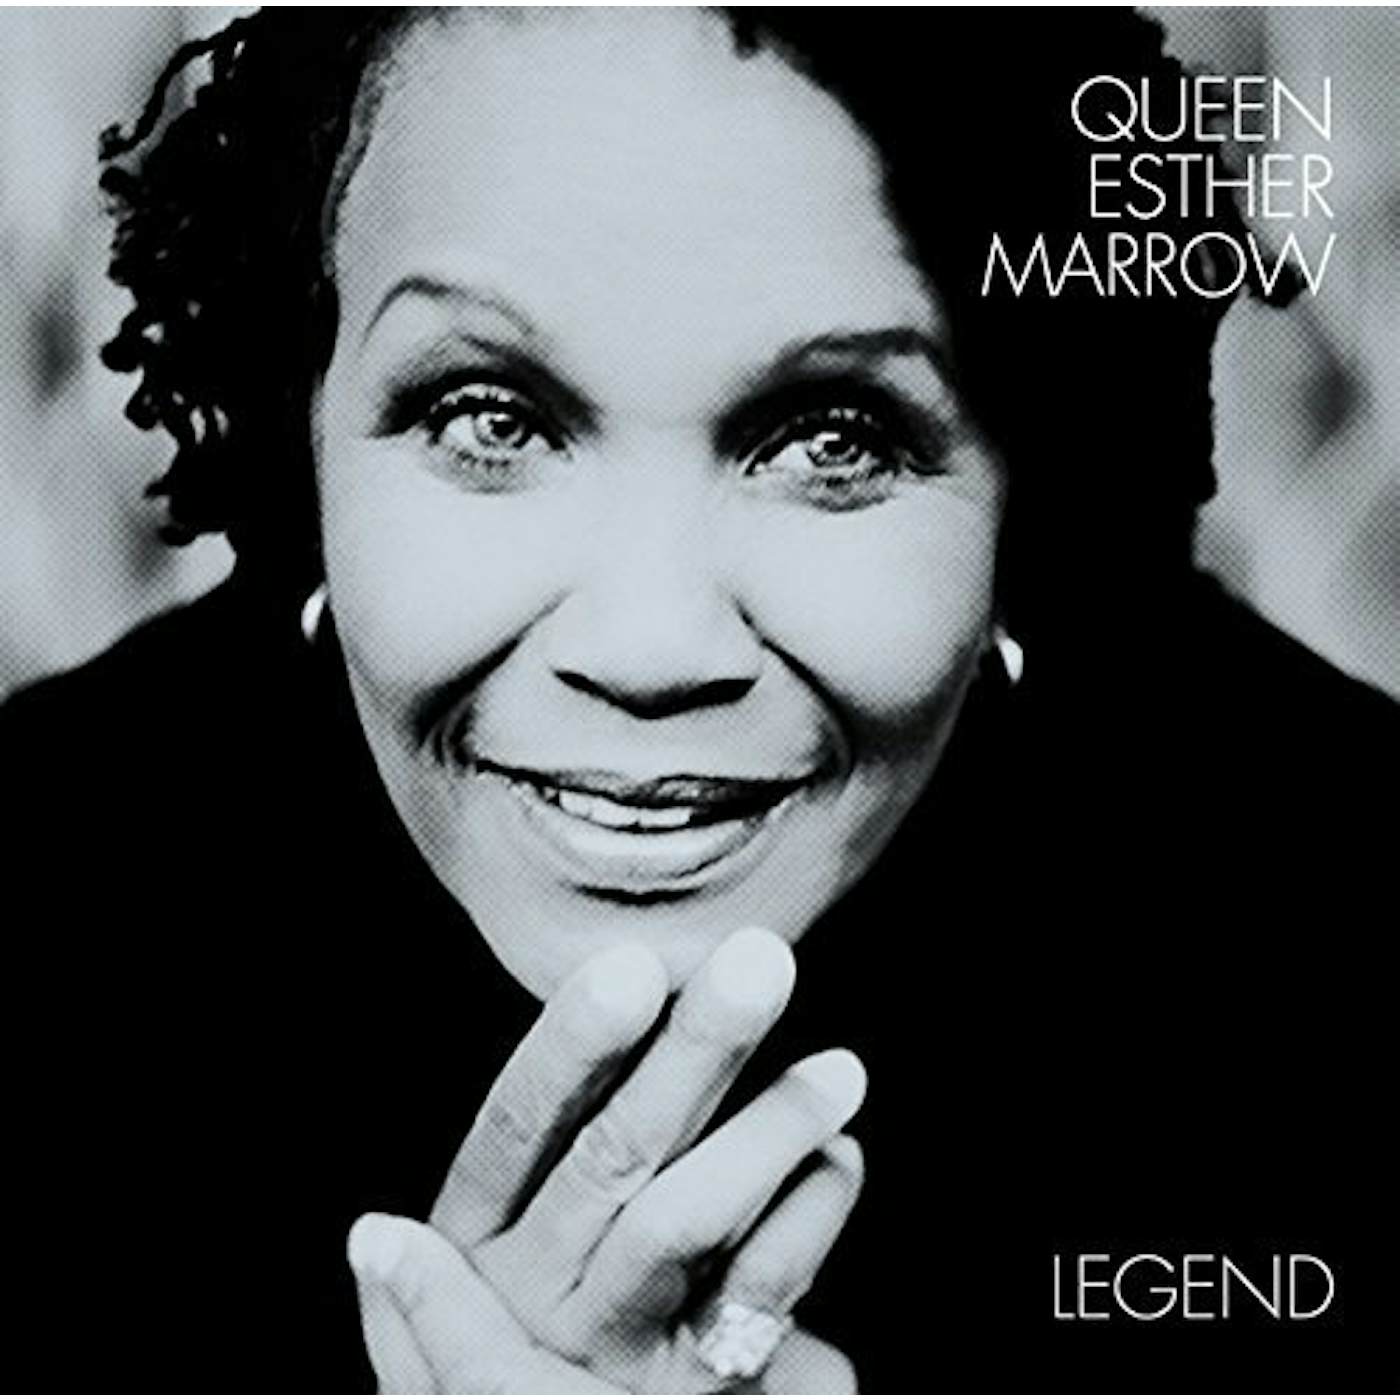 Queen Esther Marrow Legend Vinyl Record